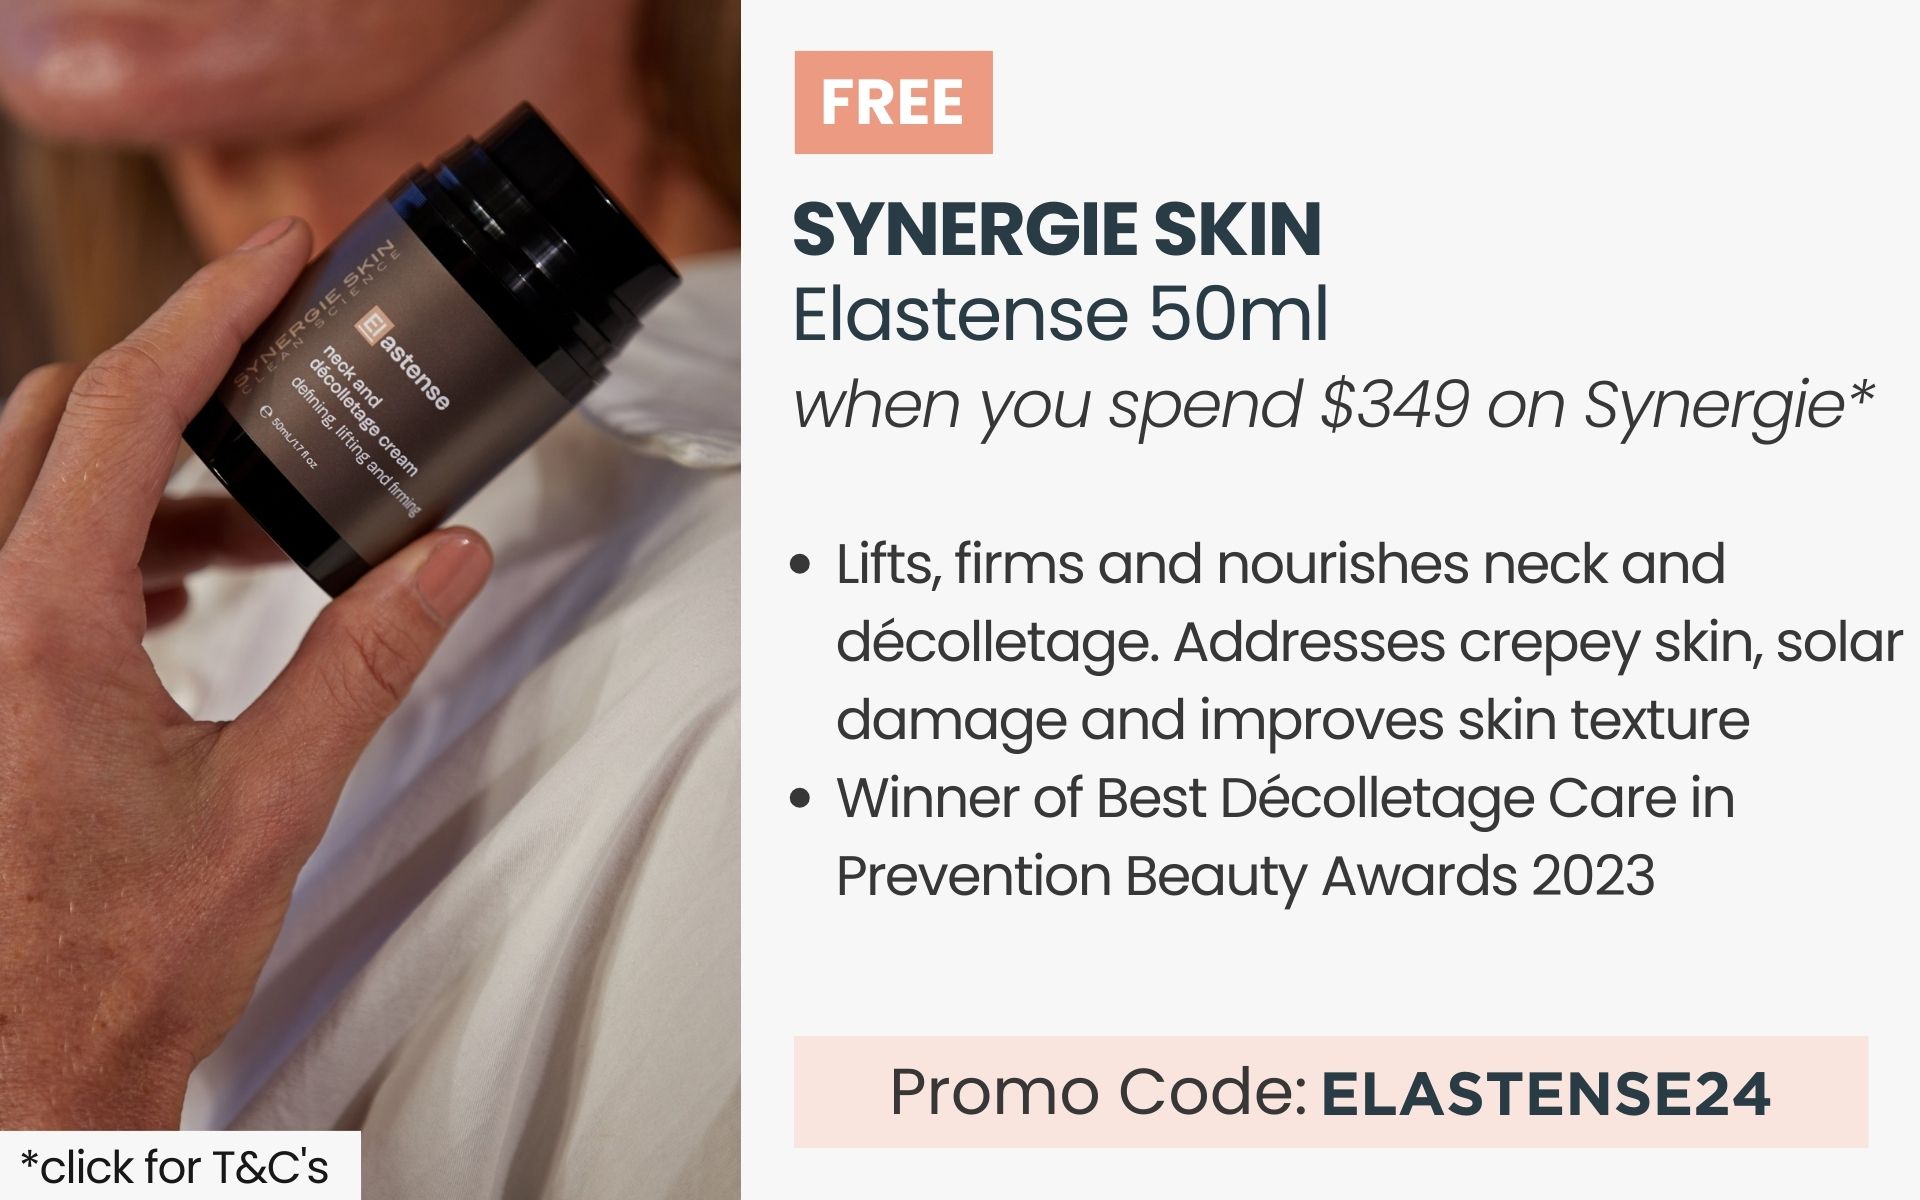 FREE Synergie Skin Elastense 50ml worth $149. Min spend $349 on Synergie. Promo Code: ELASTENSE24